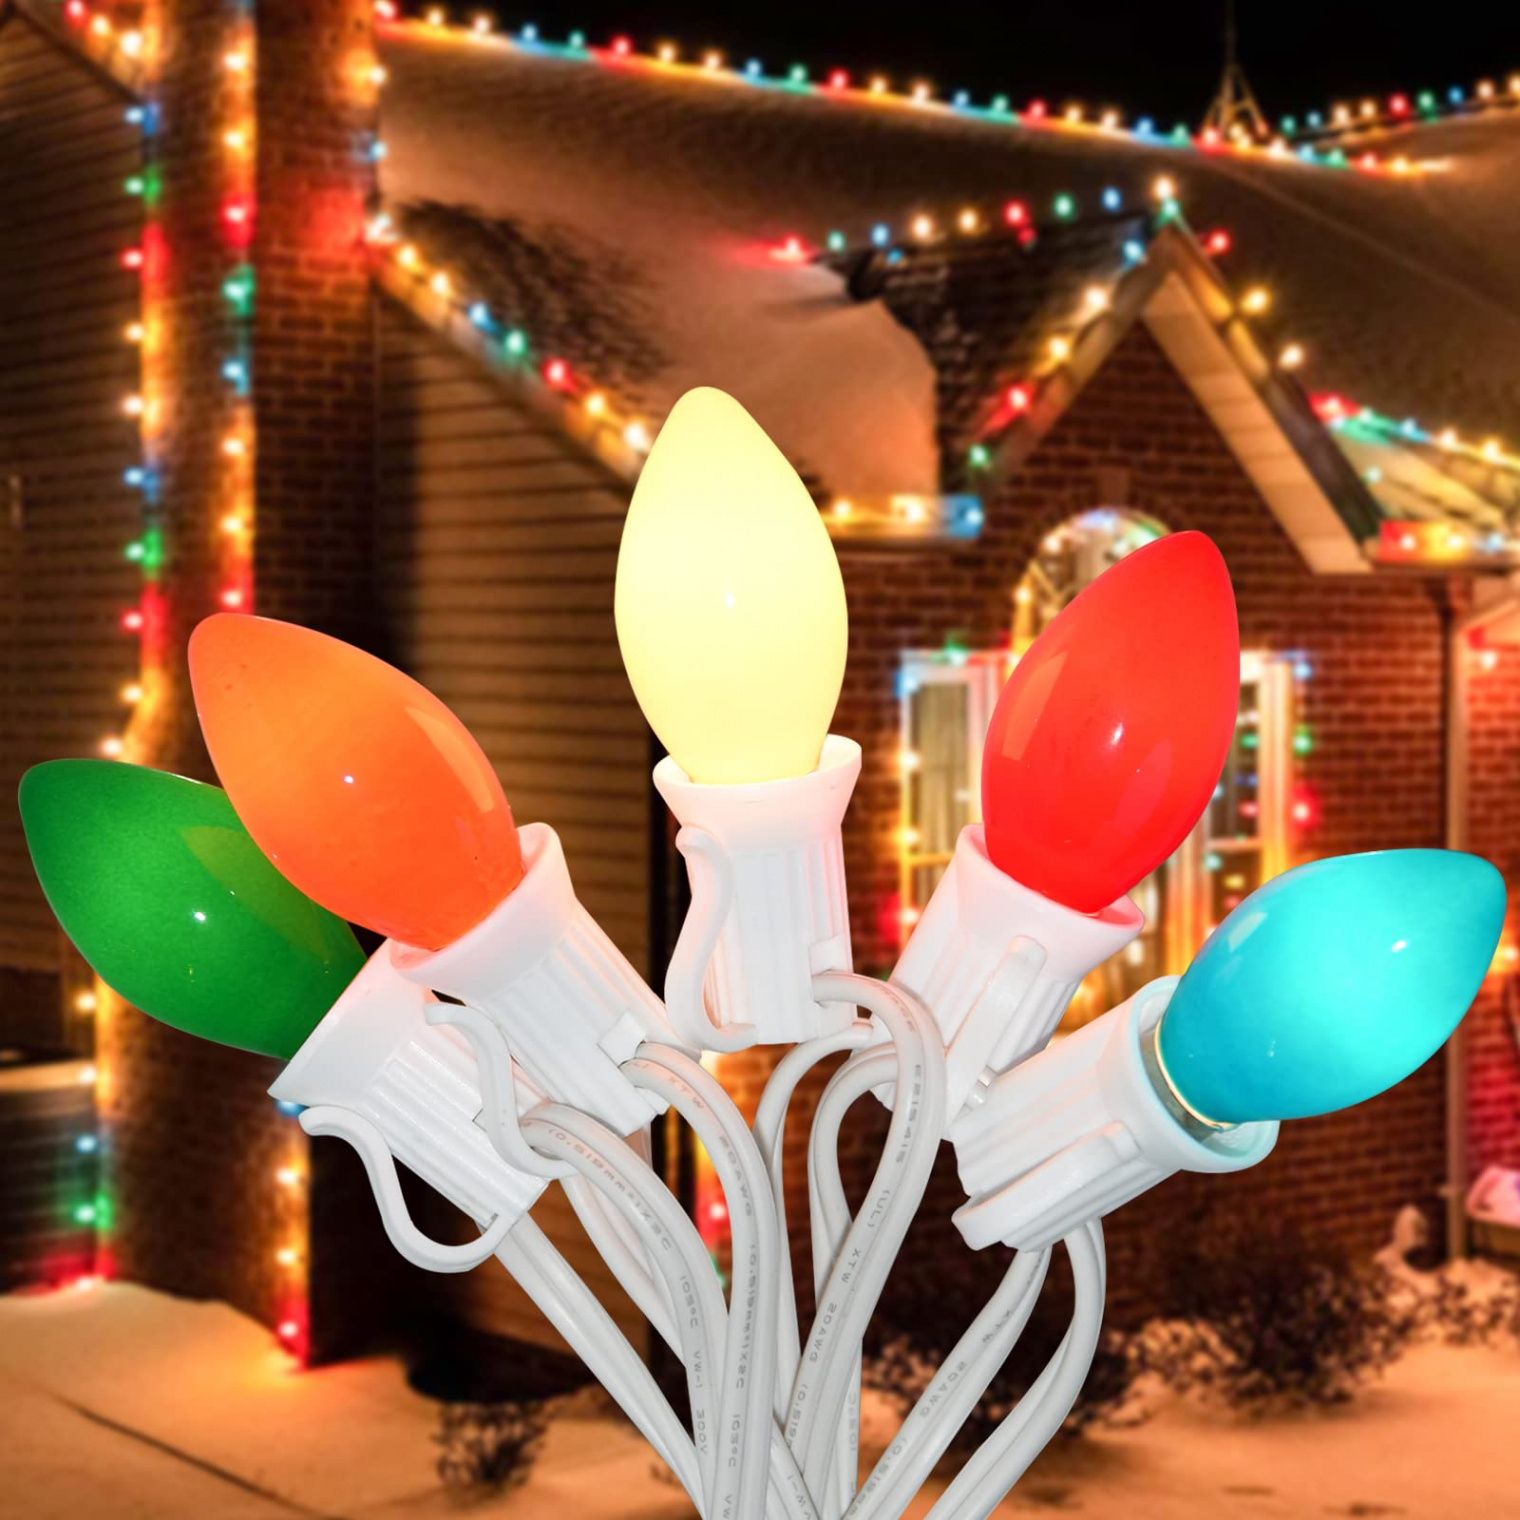 Ft Christmas Lights Multicolor, C Vintage Christmas Lights with 2  Colorful Ceramic Bulbs, Hanging Outdoor Christmas Lights for Christmas Tree